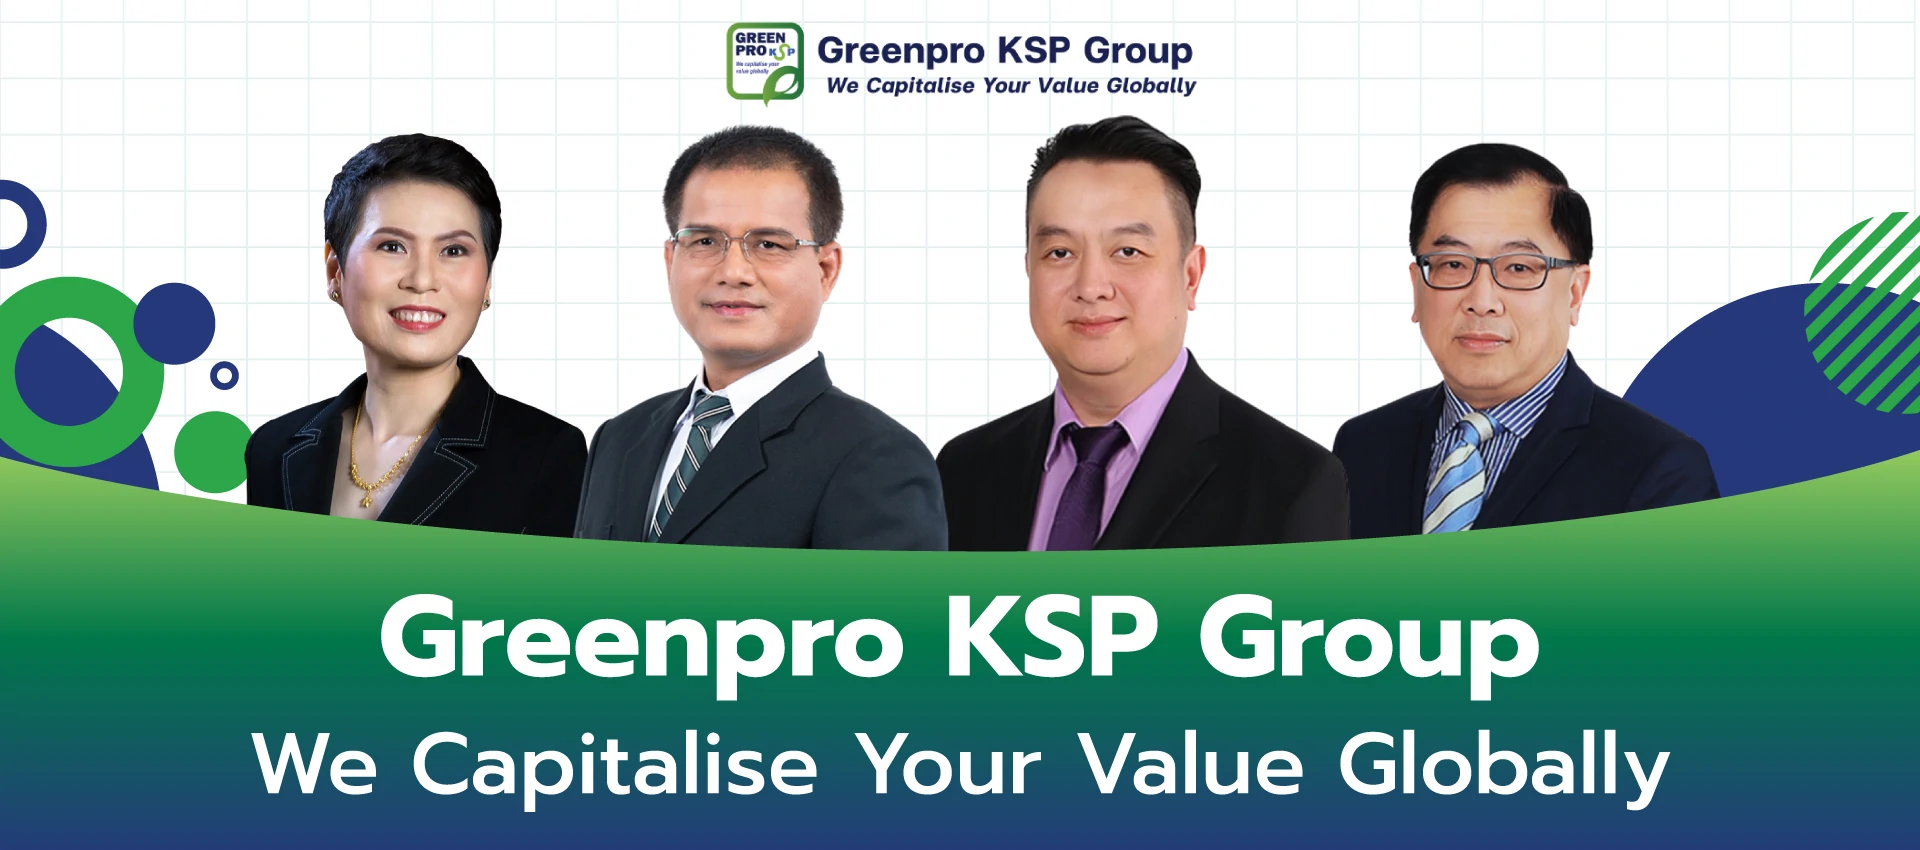 greenpro-ksp-group-1